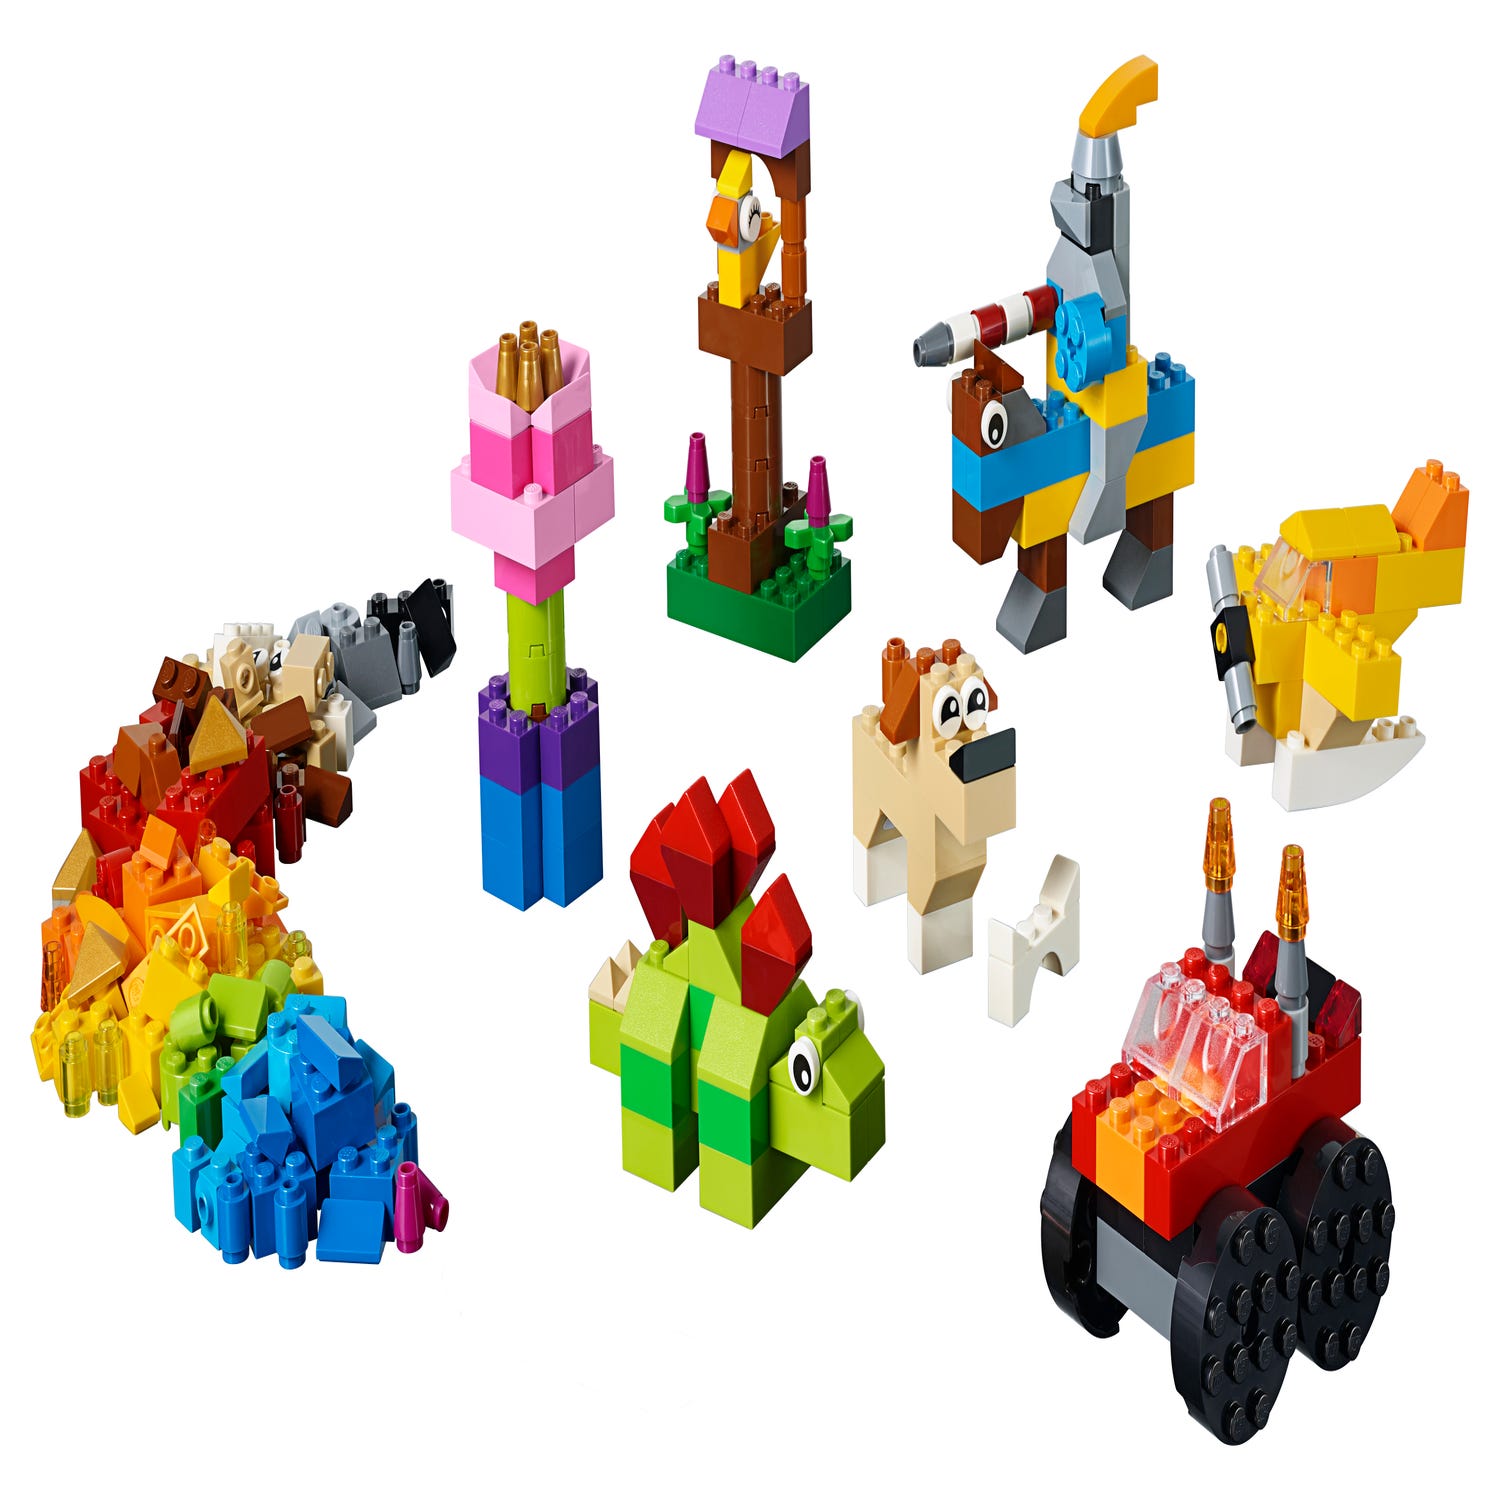 Afvise Stevenson ven Basic Brick Set 11002 | Classic | Buy online at the Official LEGO® Shop US